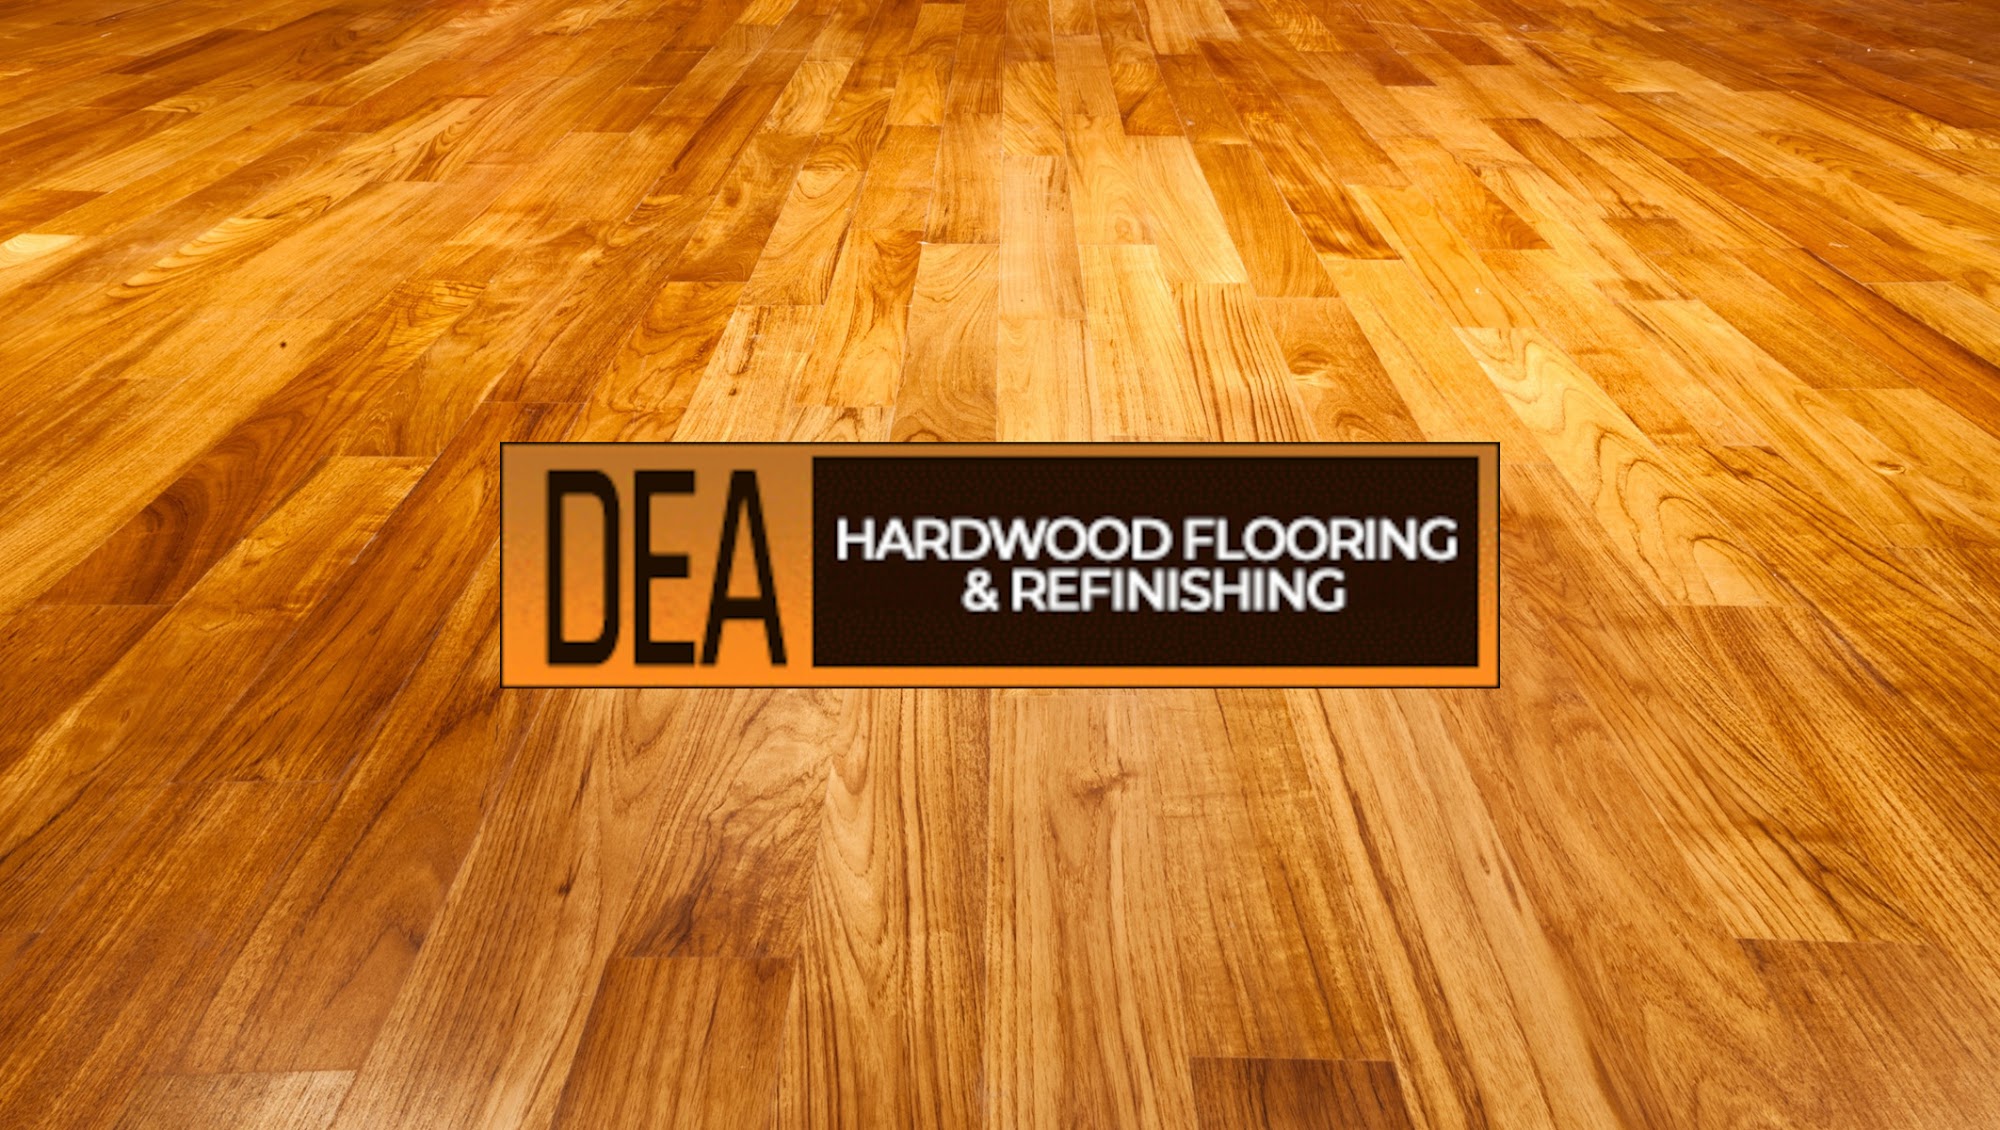 DEA Hardwood Flooring & Refinishing